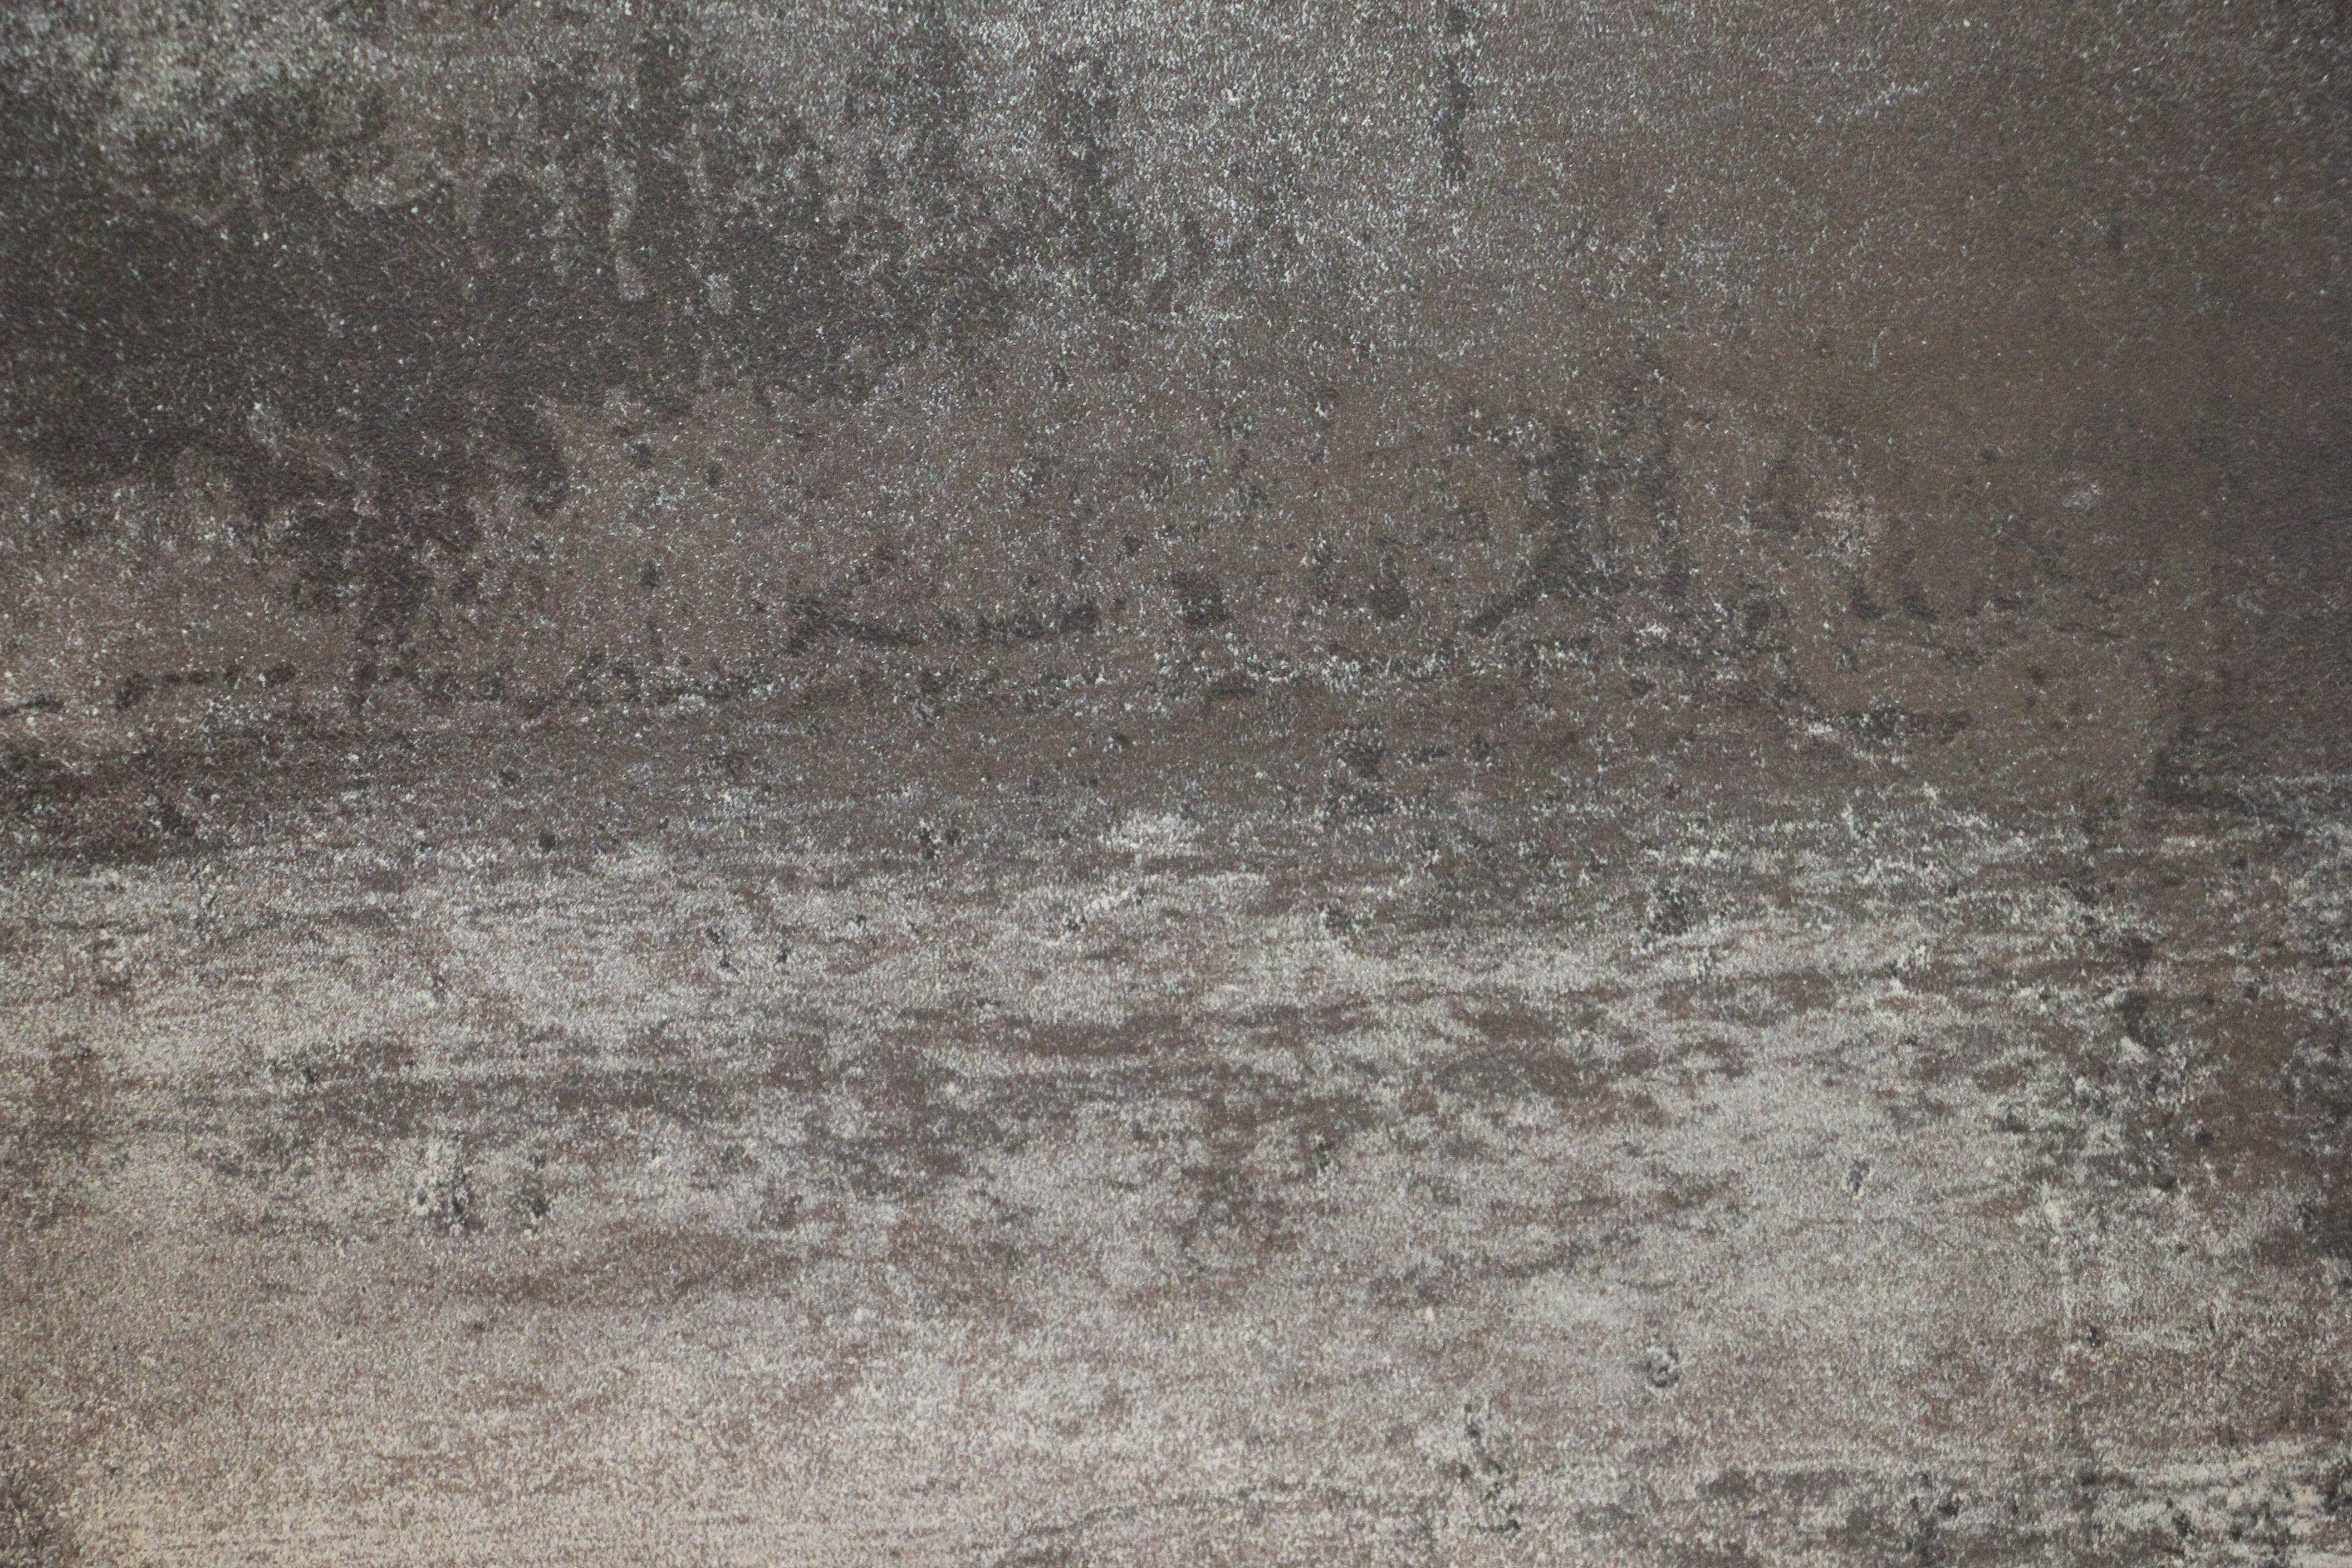 grey grunge texture rough concrete floor dirty stock photo ...